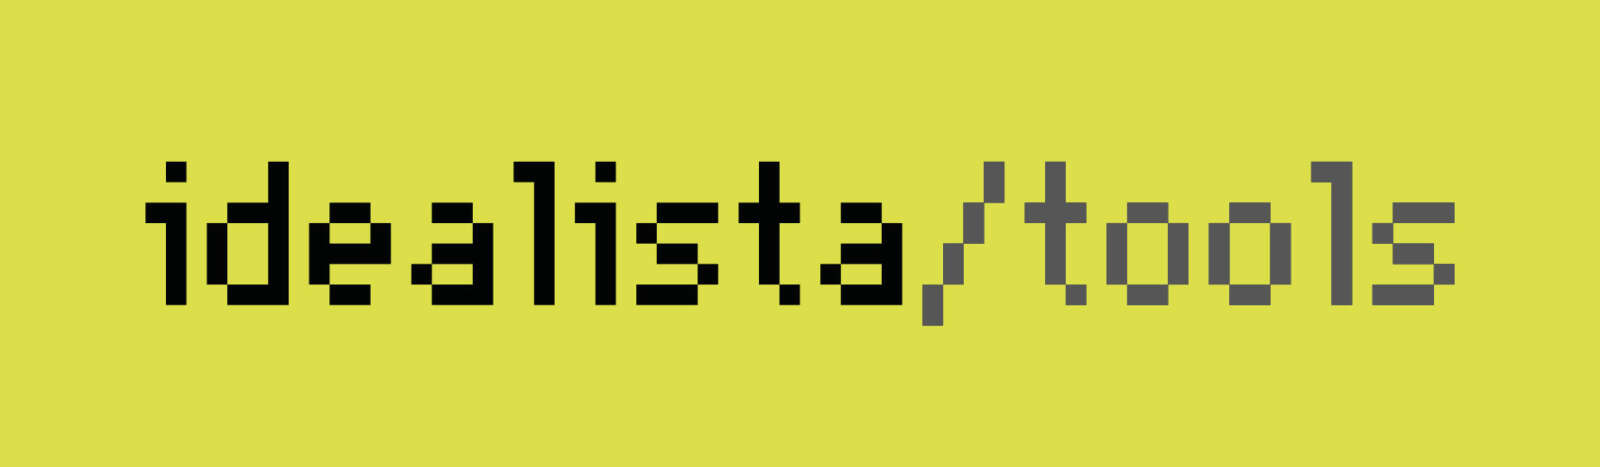 idealista/tools